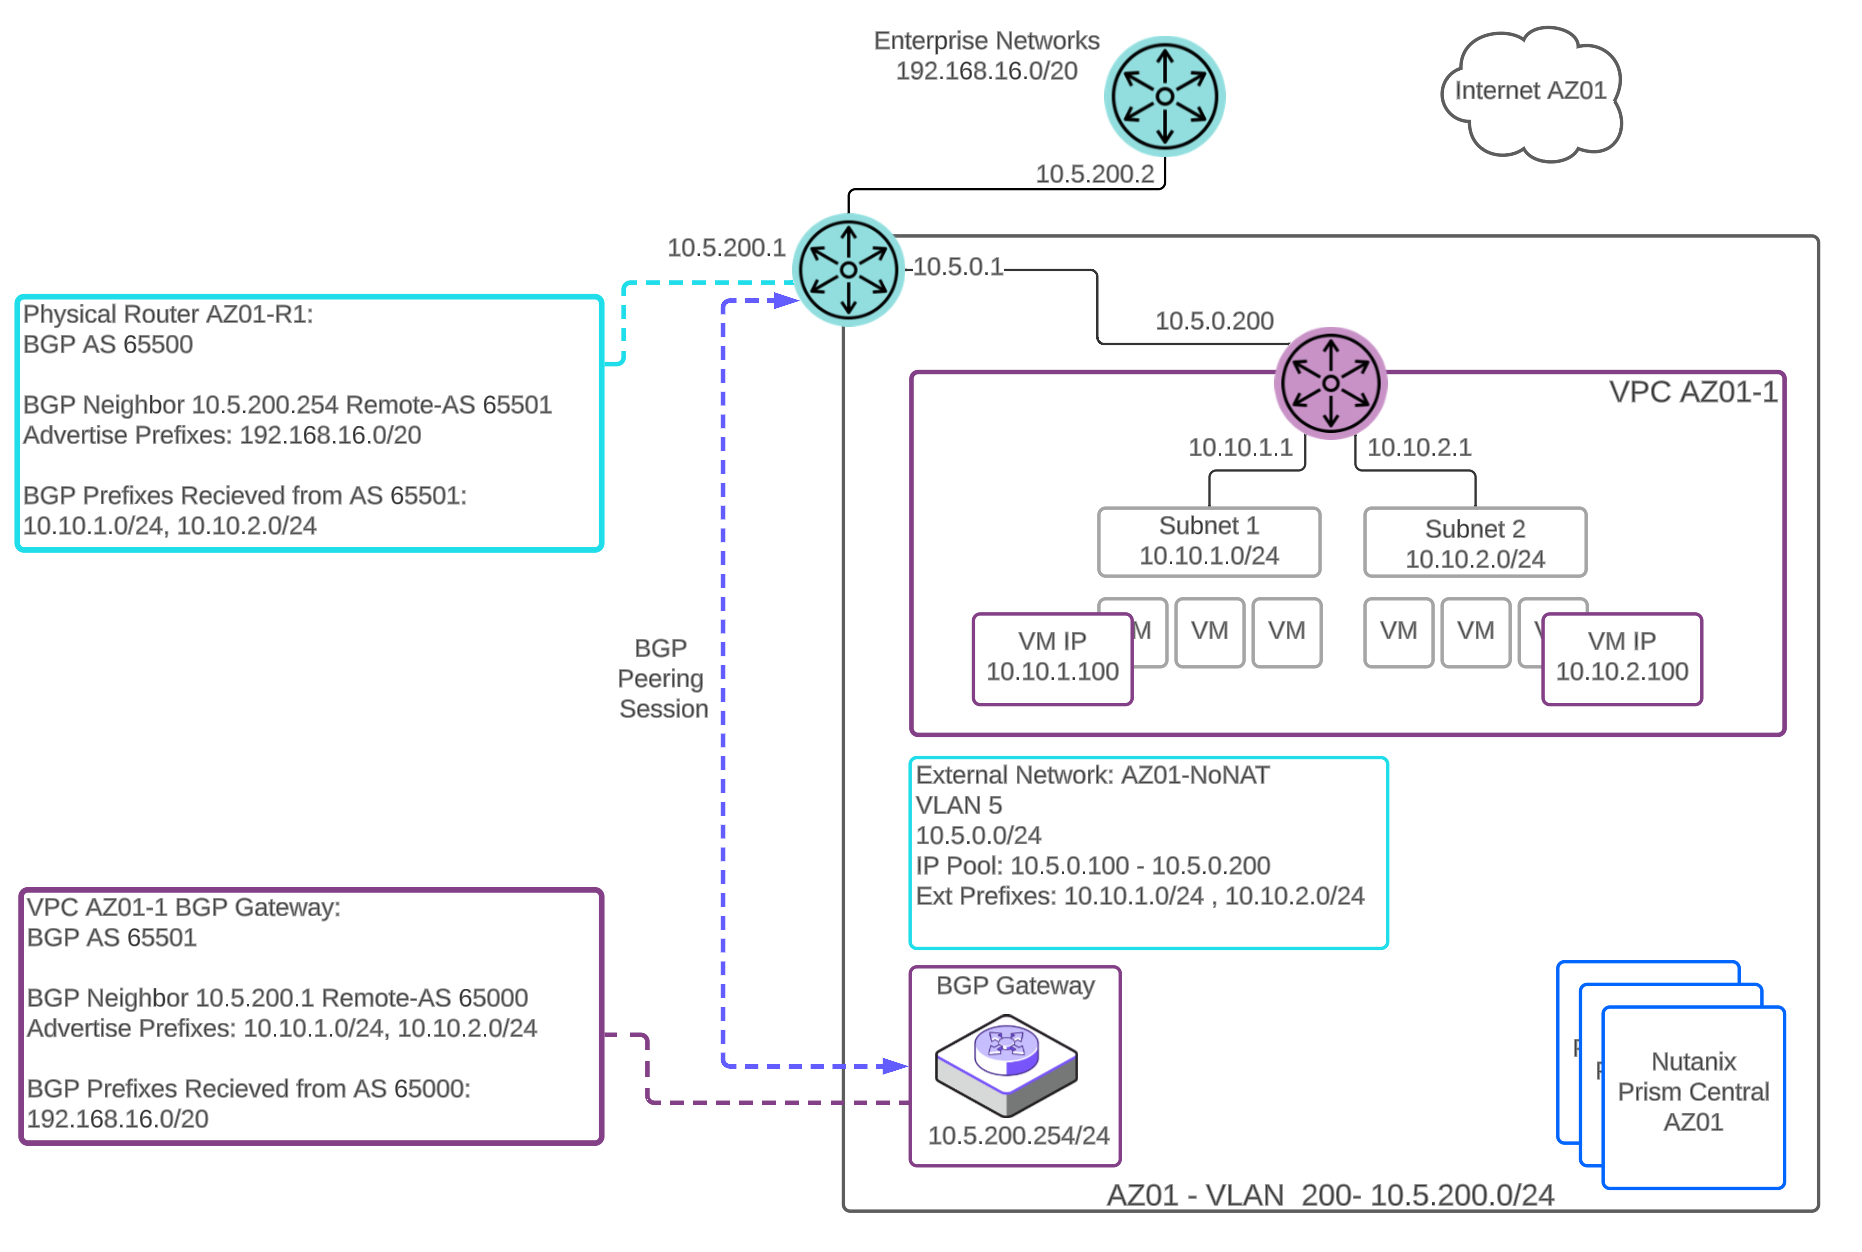 Flow Virtual Networking - BGP Gateway deployment with 1 external subnet